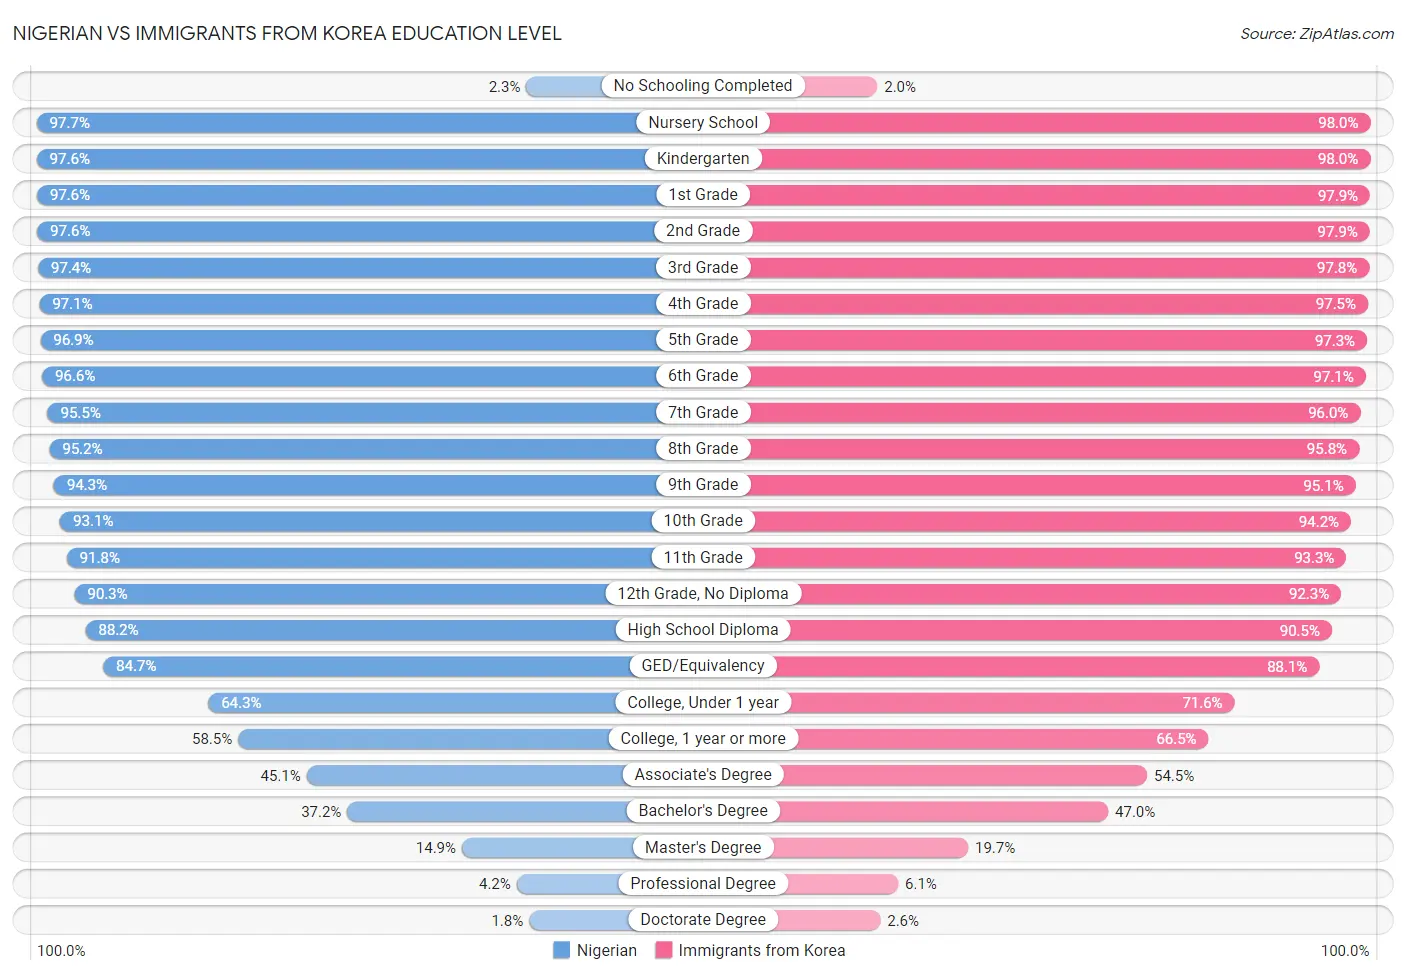 Nigerian vs Immigrants from Korea Education Level